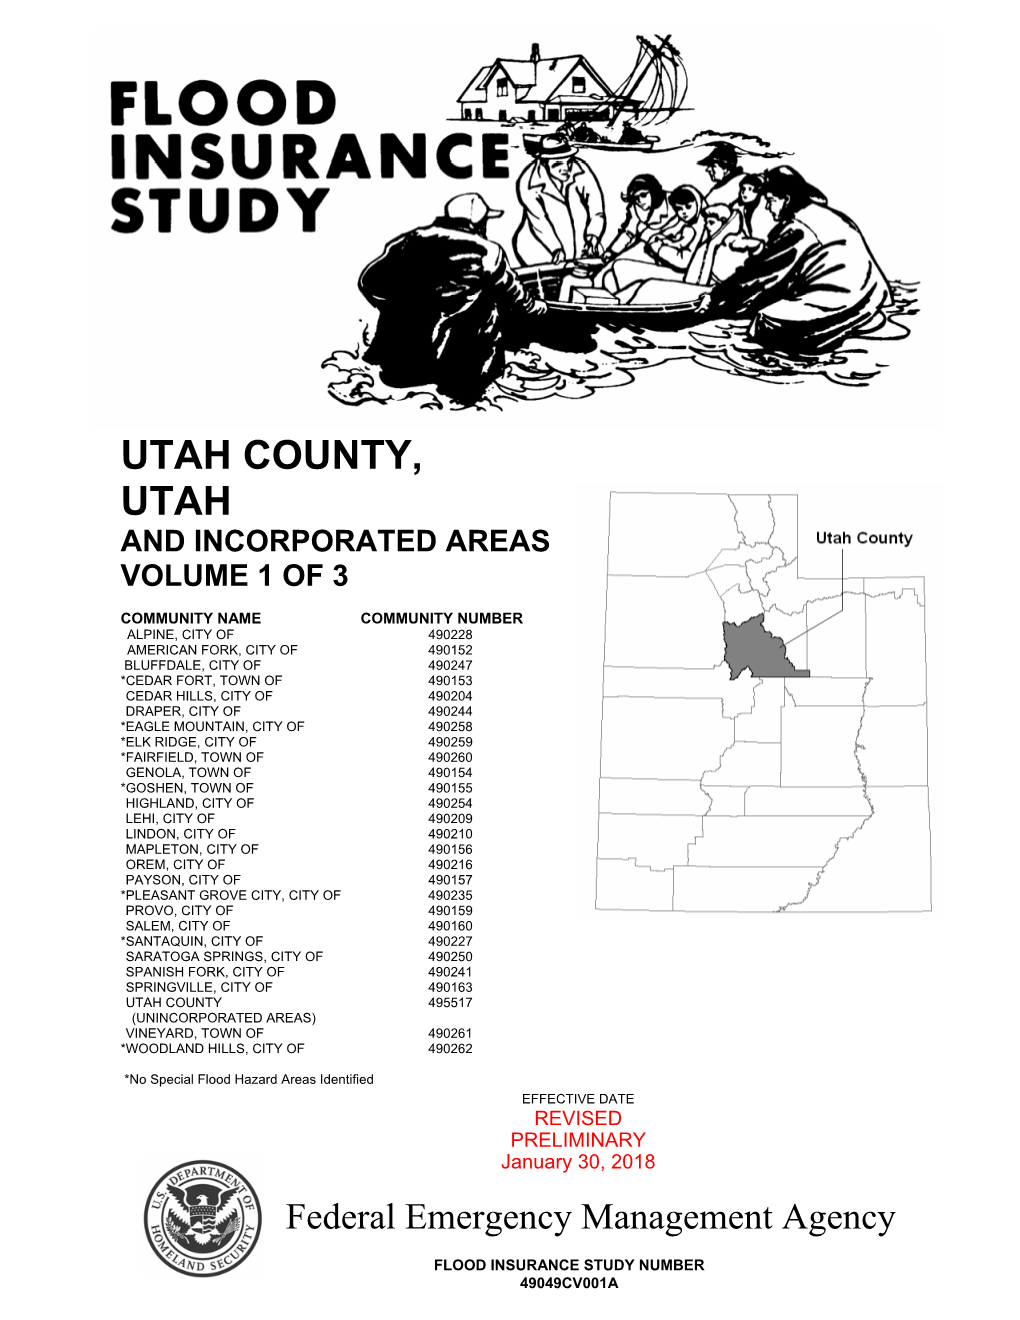 Utah County, UT Preliminary Flood Insurance Study